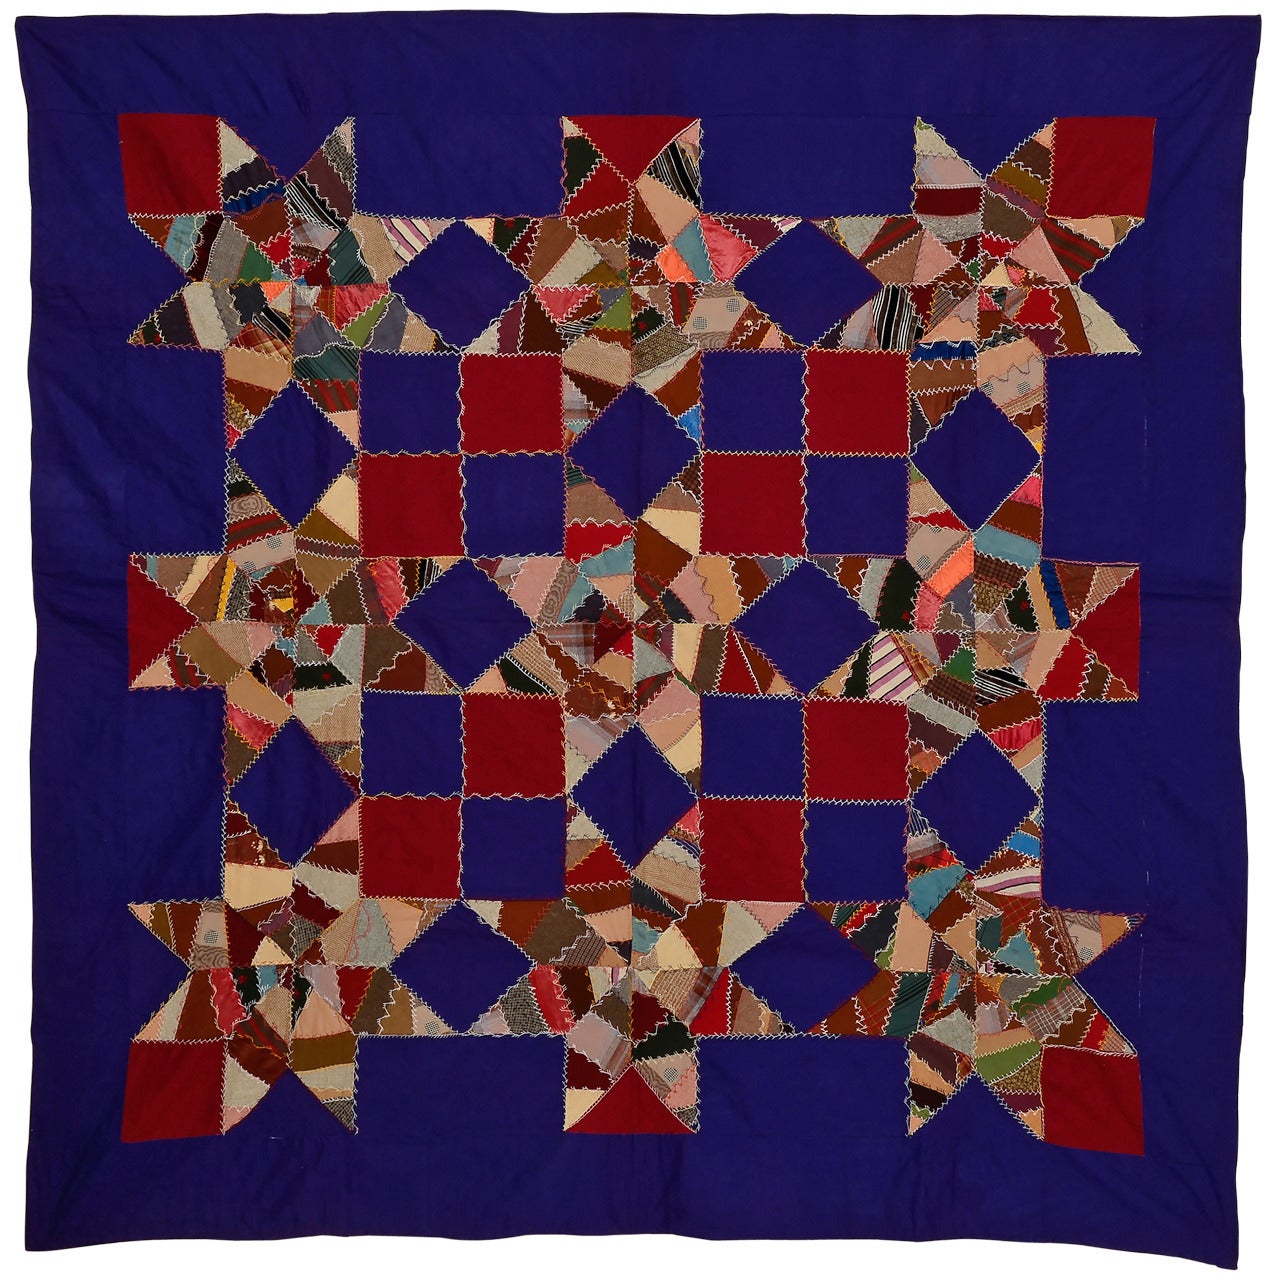 Purple Mennonite Touching Stars quilt #1283210 with touching stars pattern.